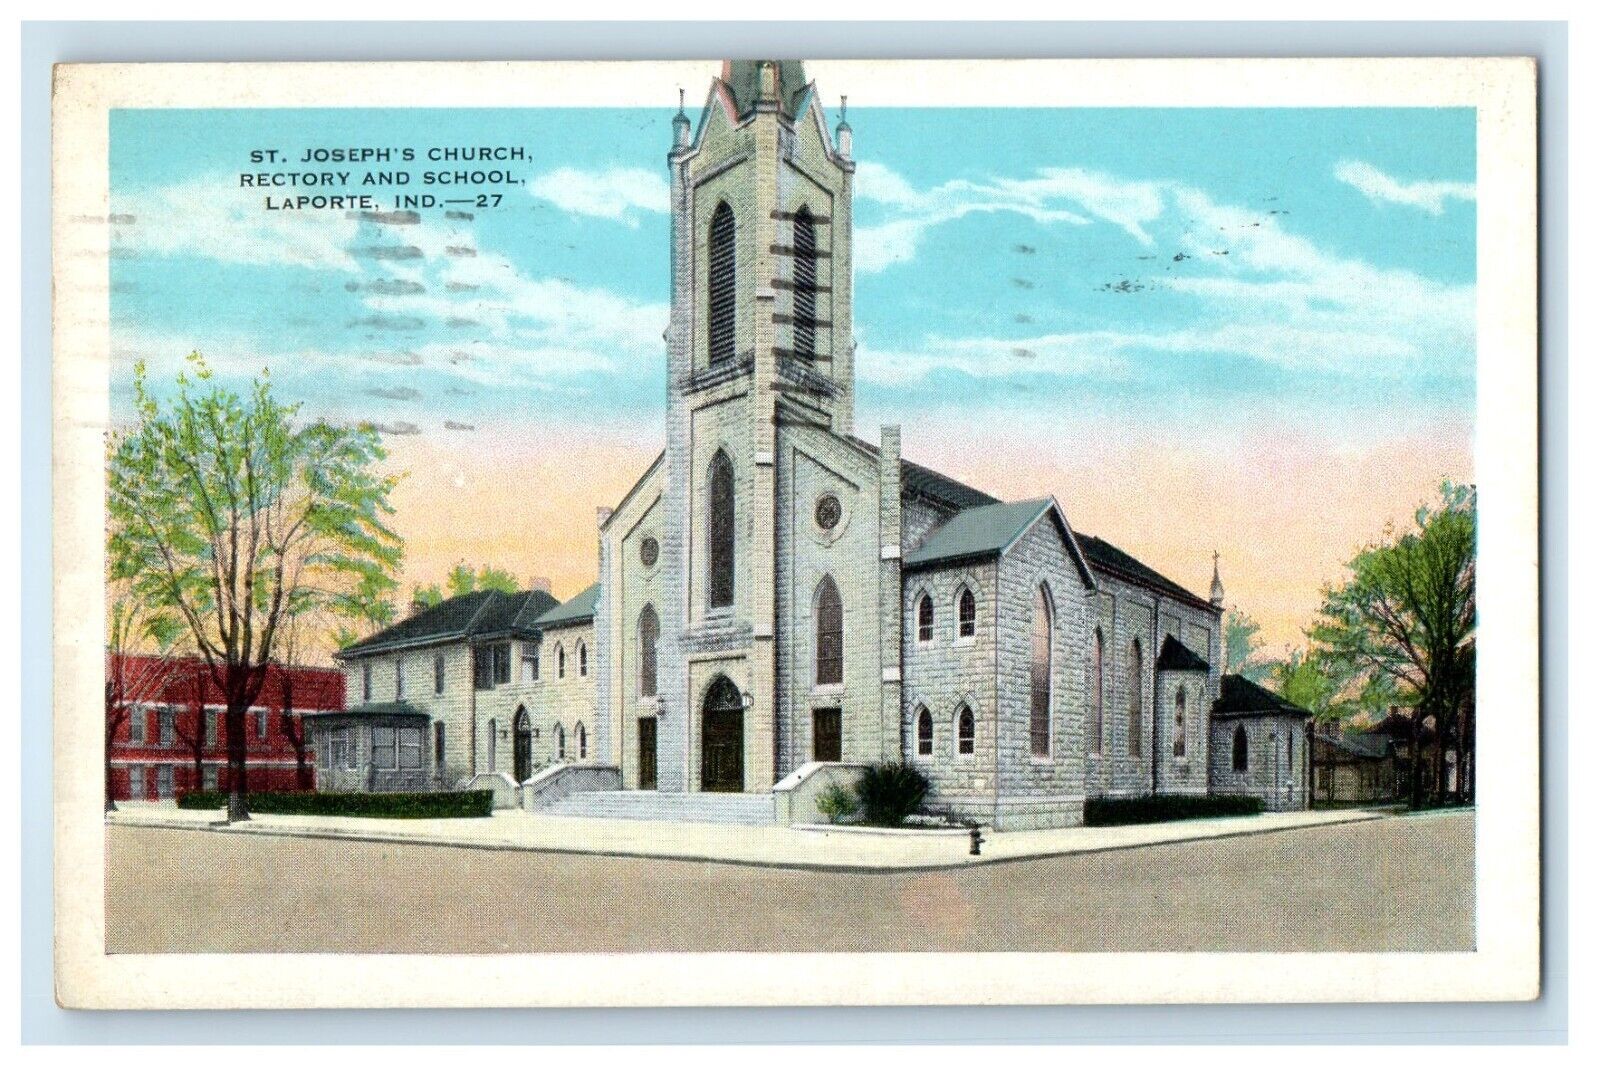 1938 St. Joseph's Church Rectory School Laporte Indiana IN Vintage Postcard